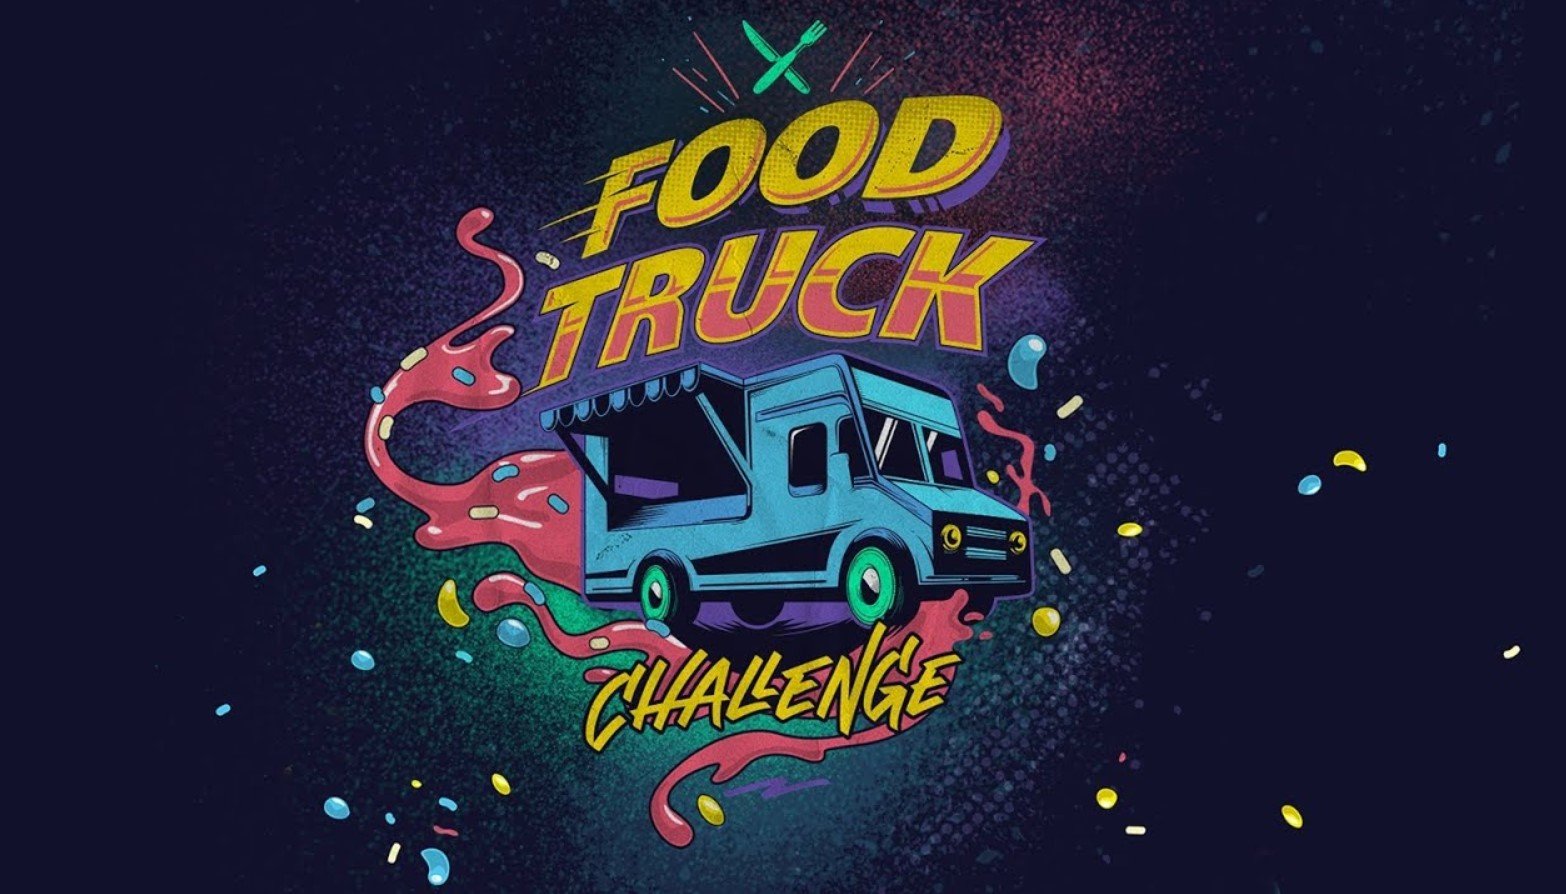 harvard food truck challenge answers